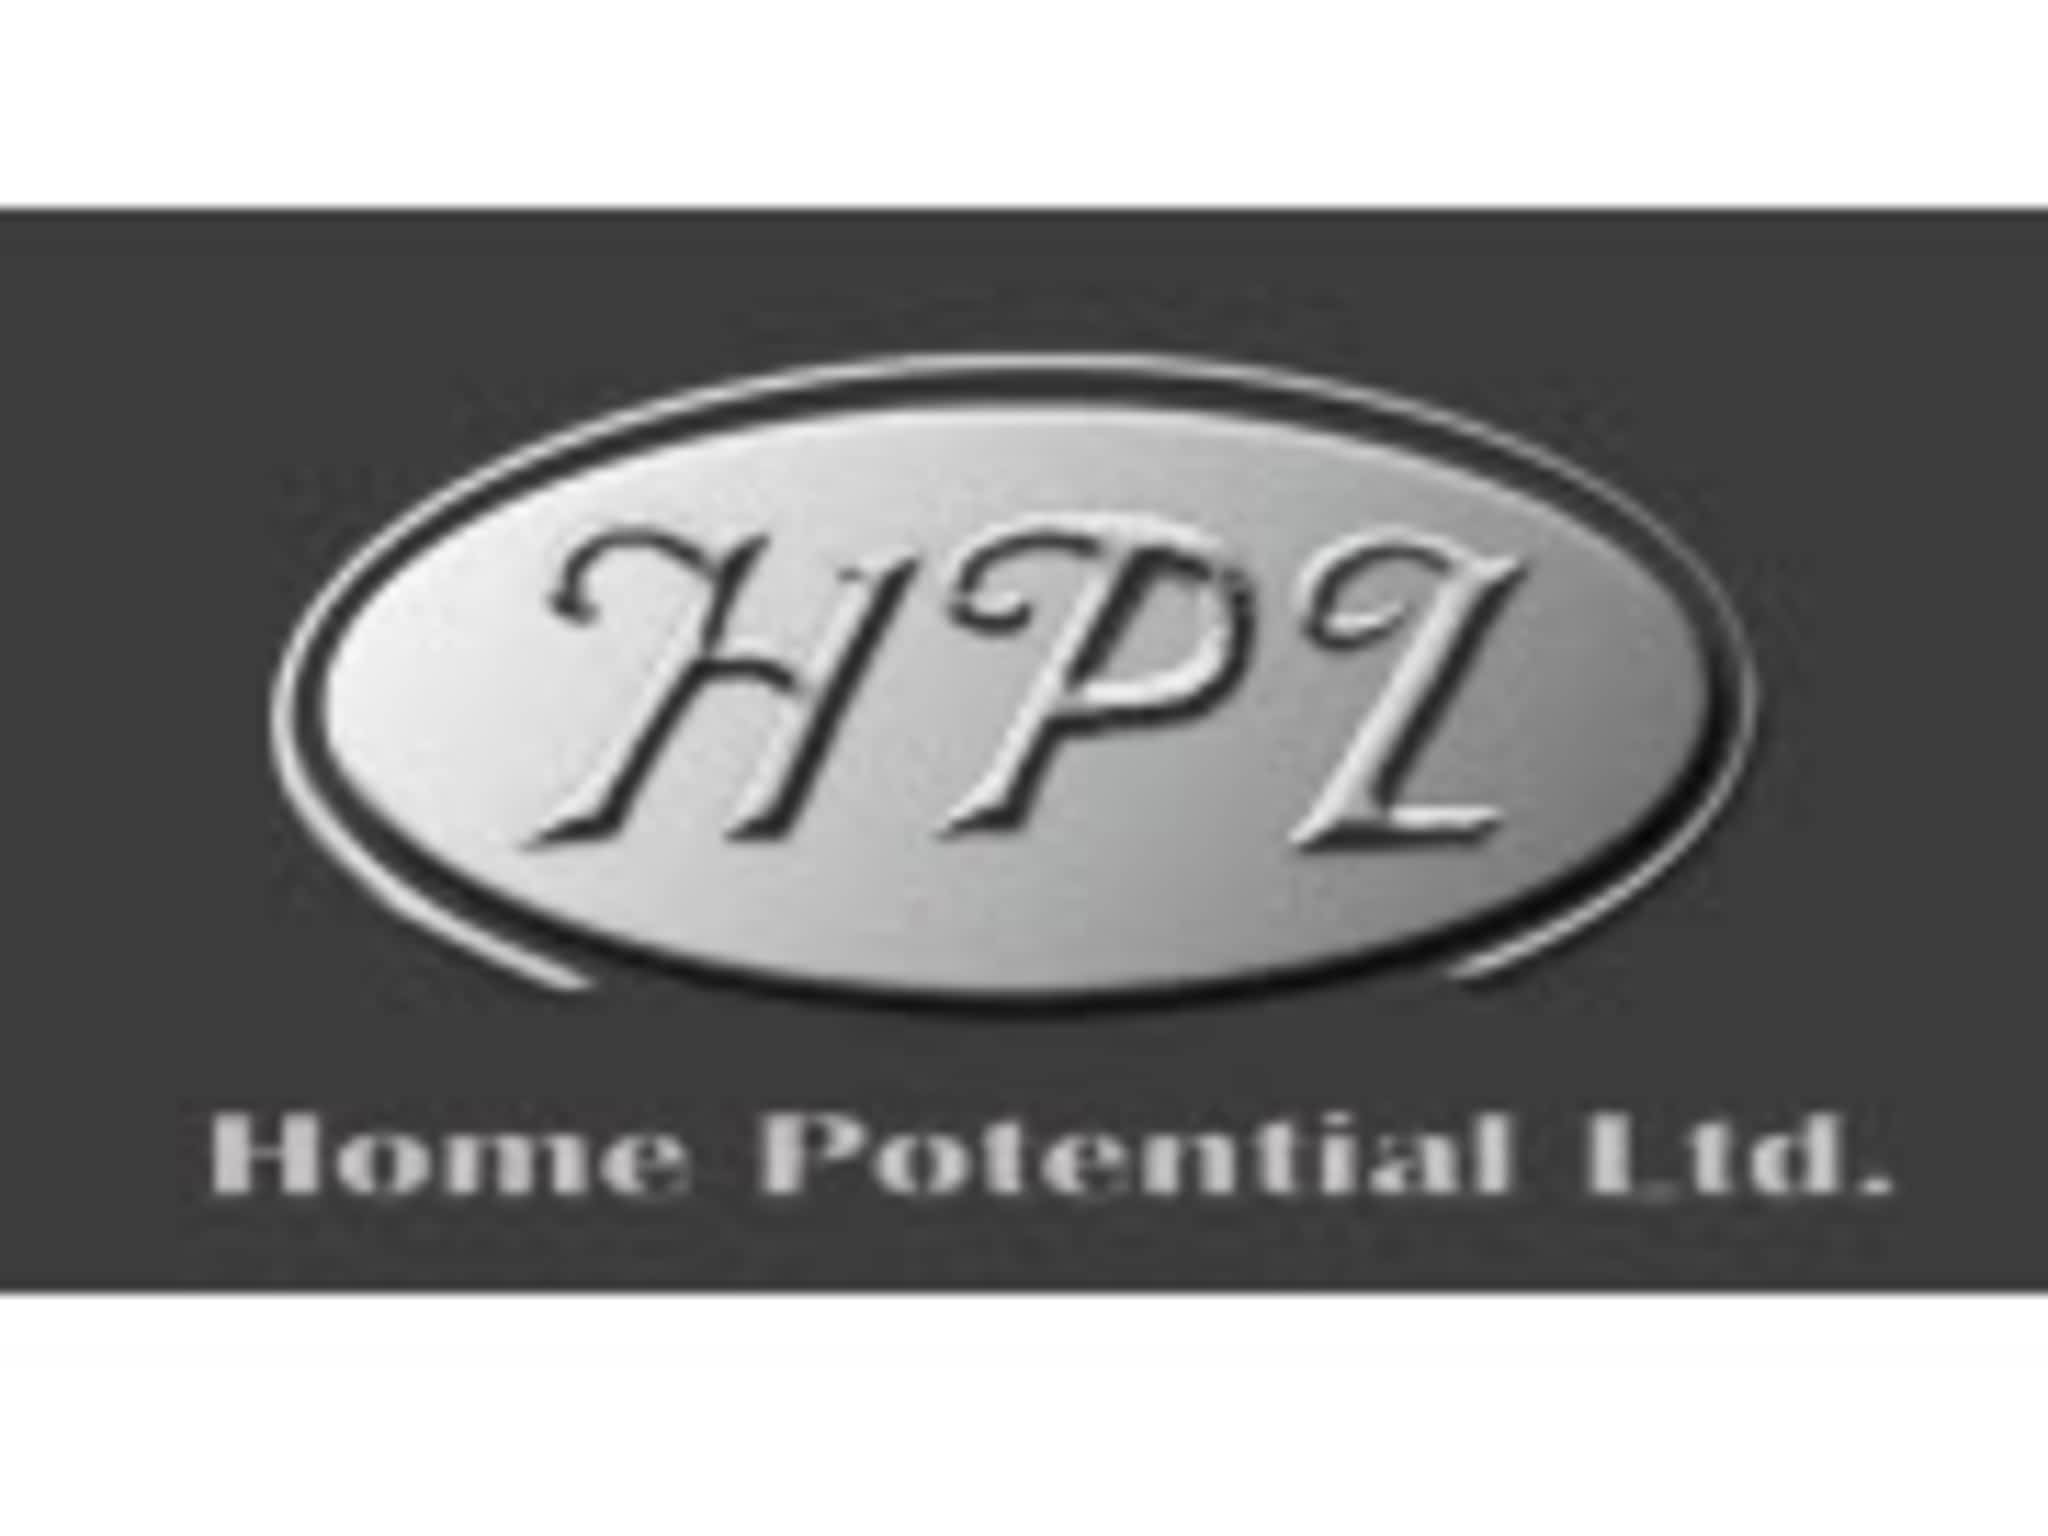 photo Home Potential Ltd